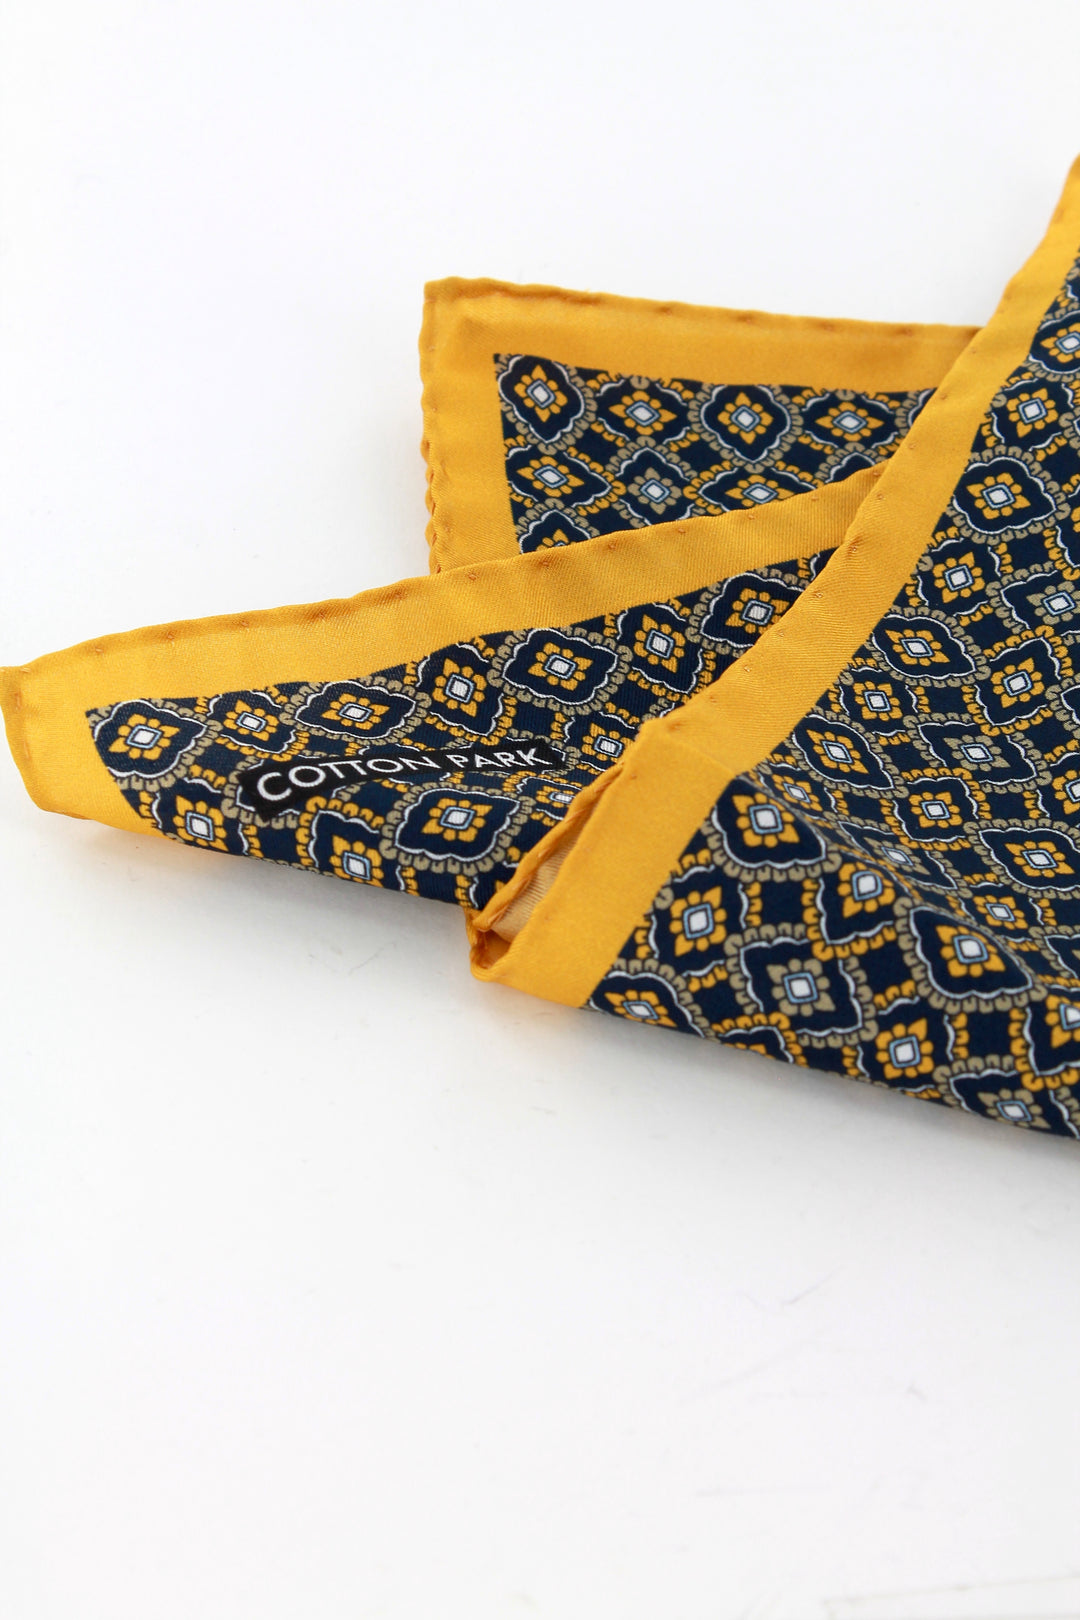 Pochette soie jaune à motifs bleu marine